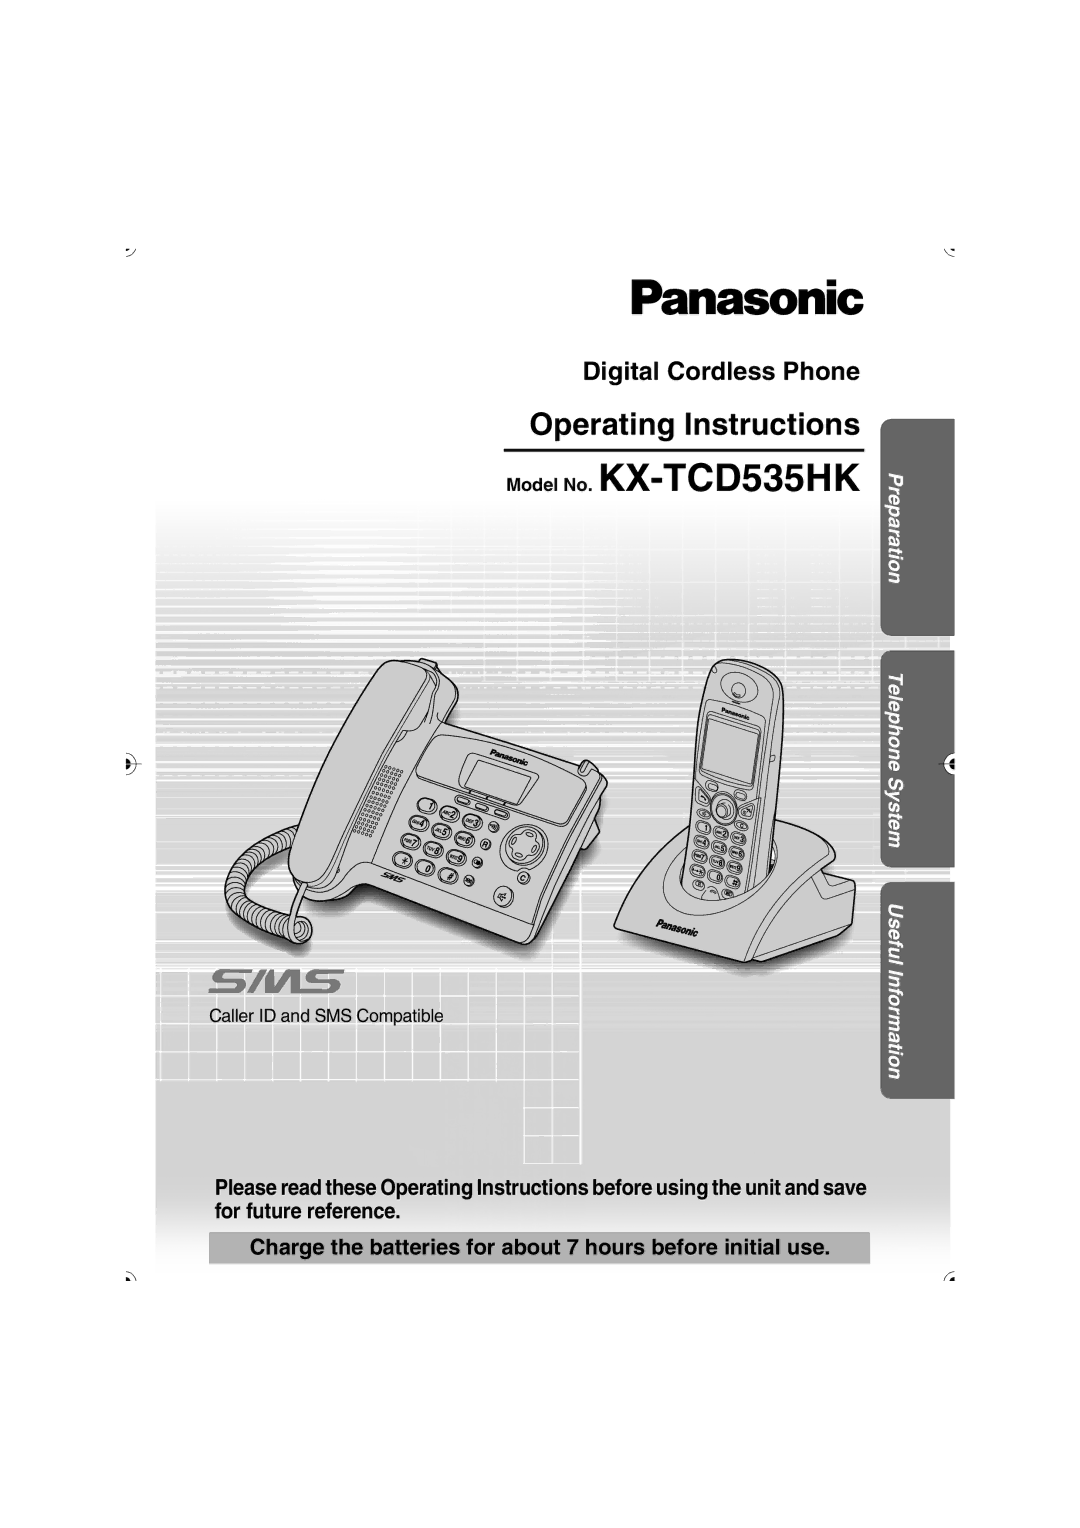 Panasonic operating instructions Model No. KX-TCD535HK, Digital Cordless Phone 